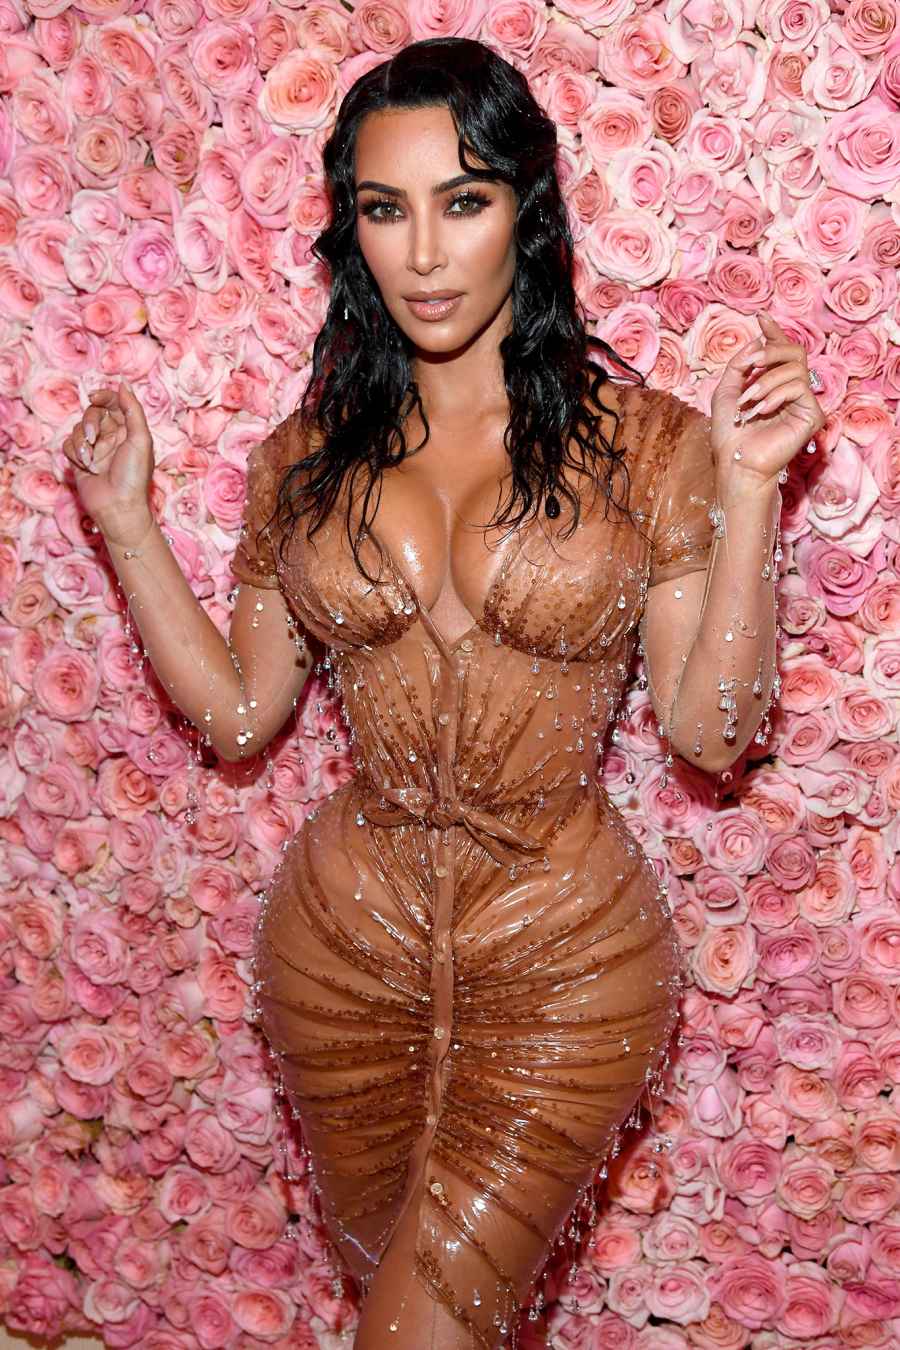 Kim Kardashian West Celeb Food Controversies